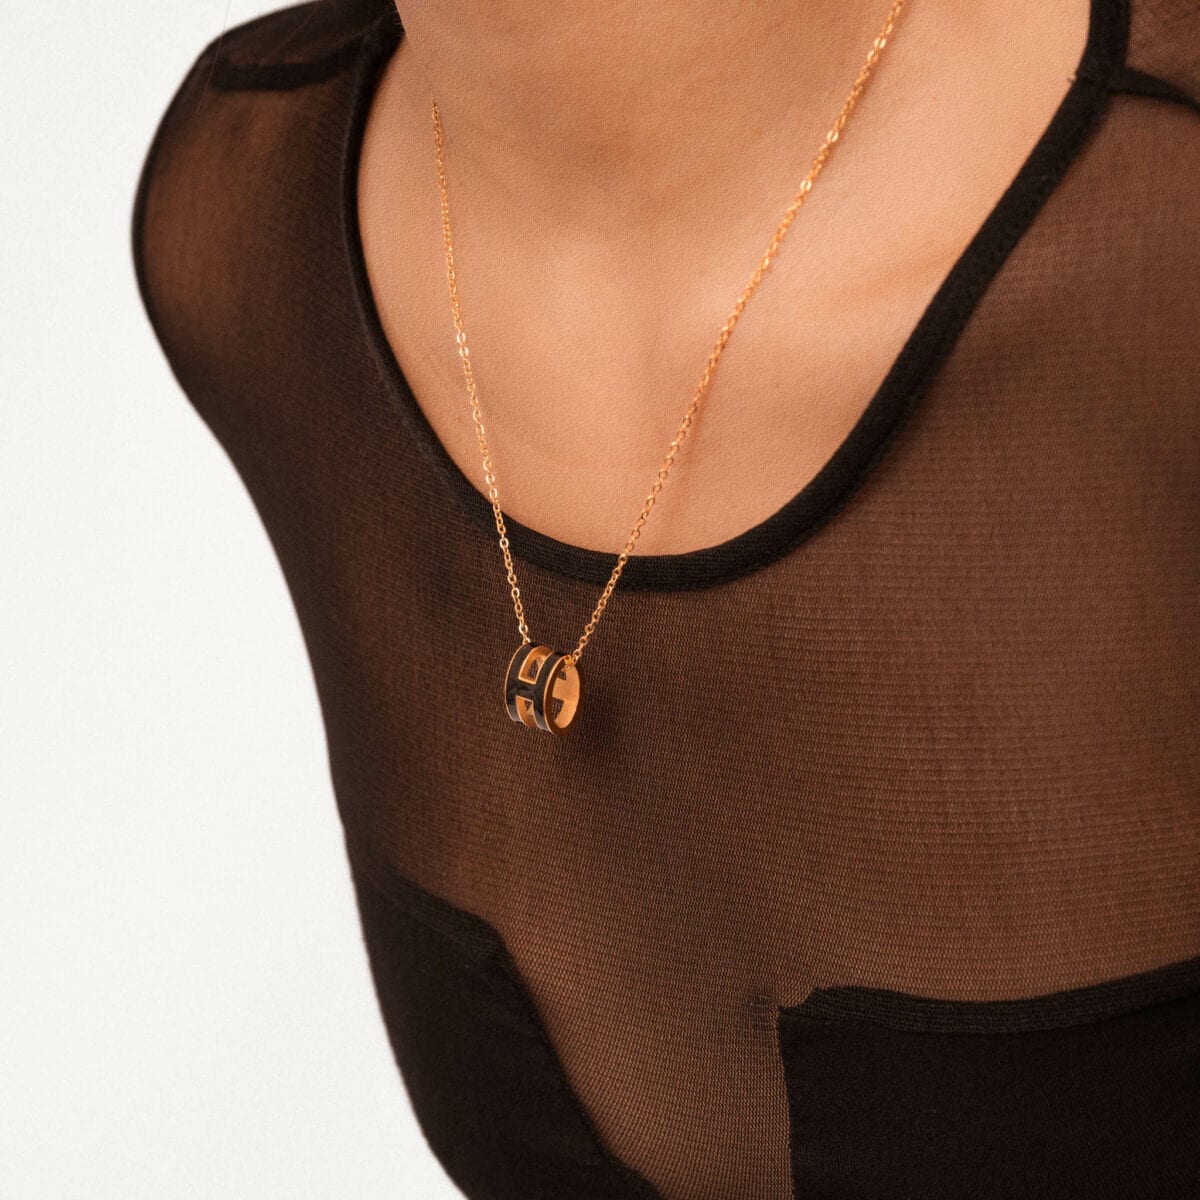 https://m.clubbella.co/product/havy/ Havy necklace (1)